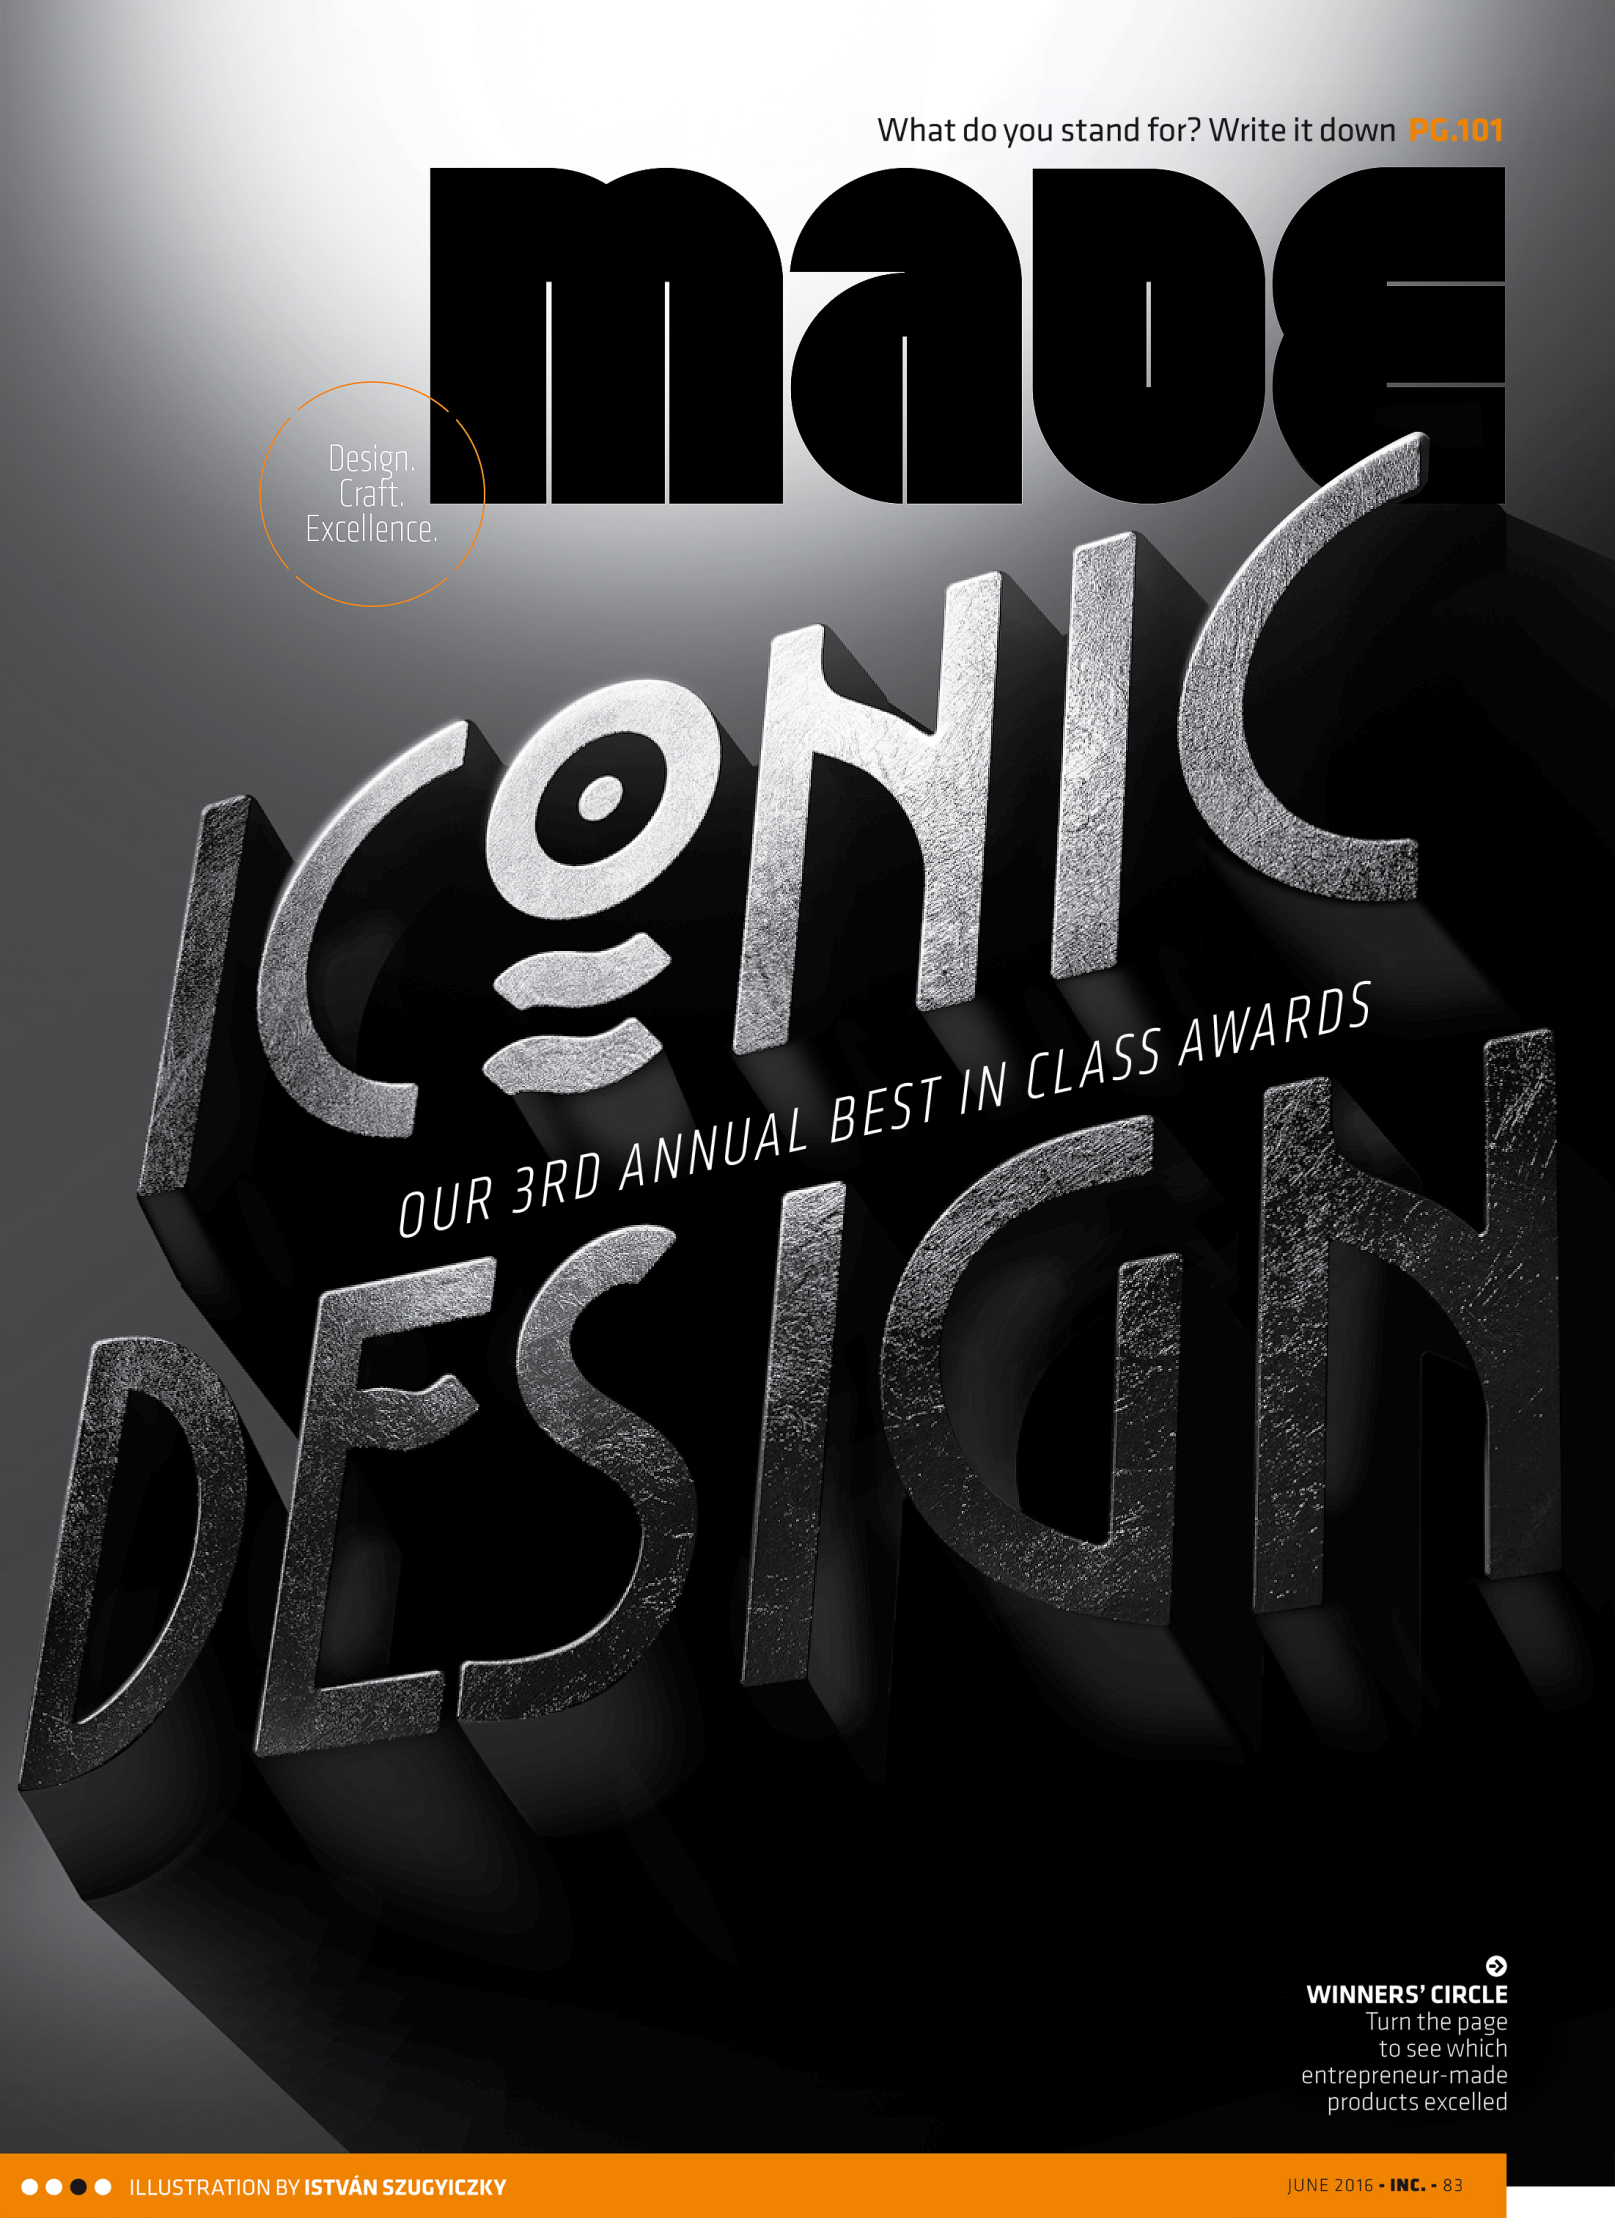 Iconic_Design_Made_RGB.jpg